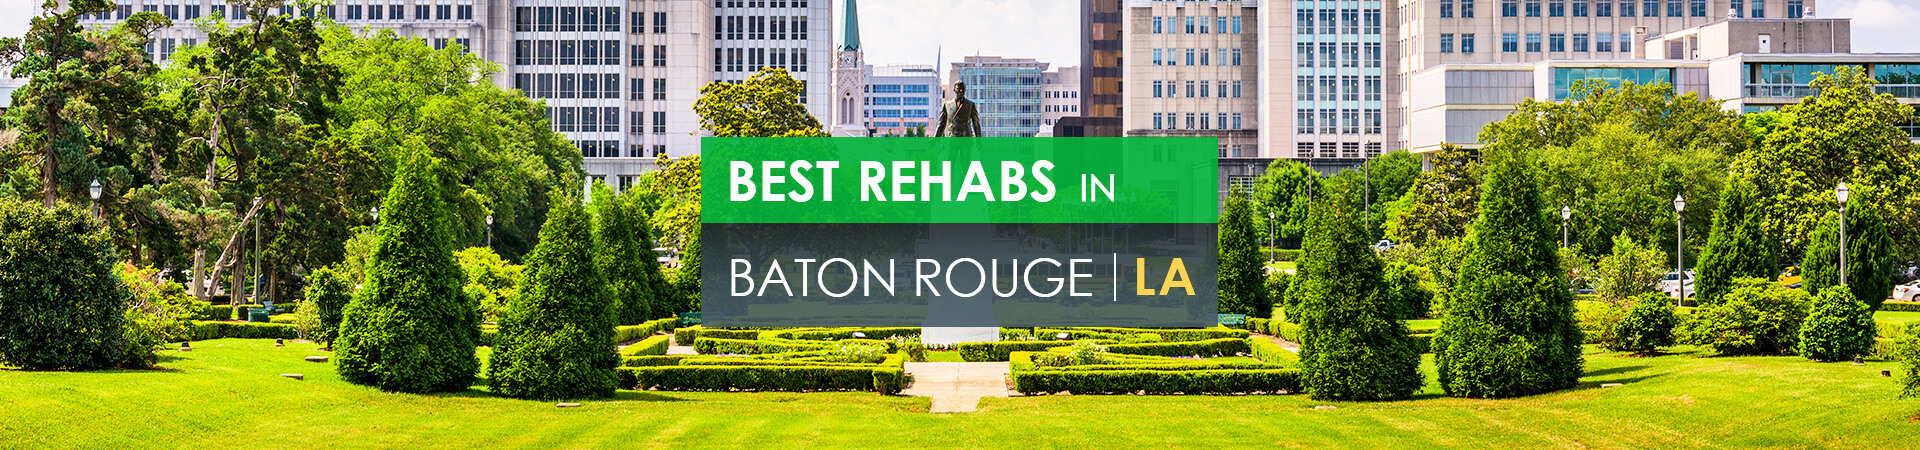 Best rehabs in Baton Rouge, LA